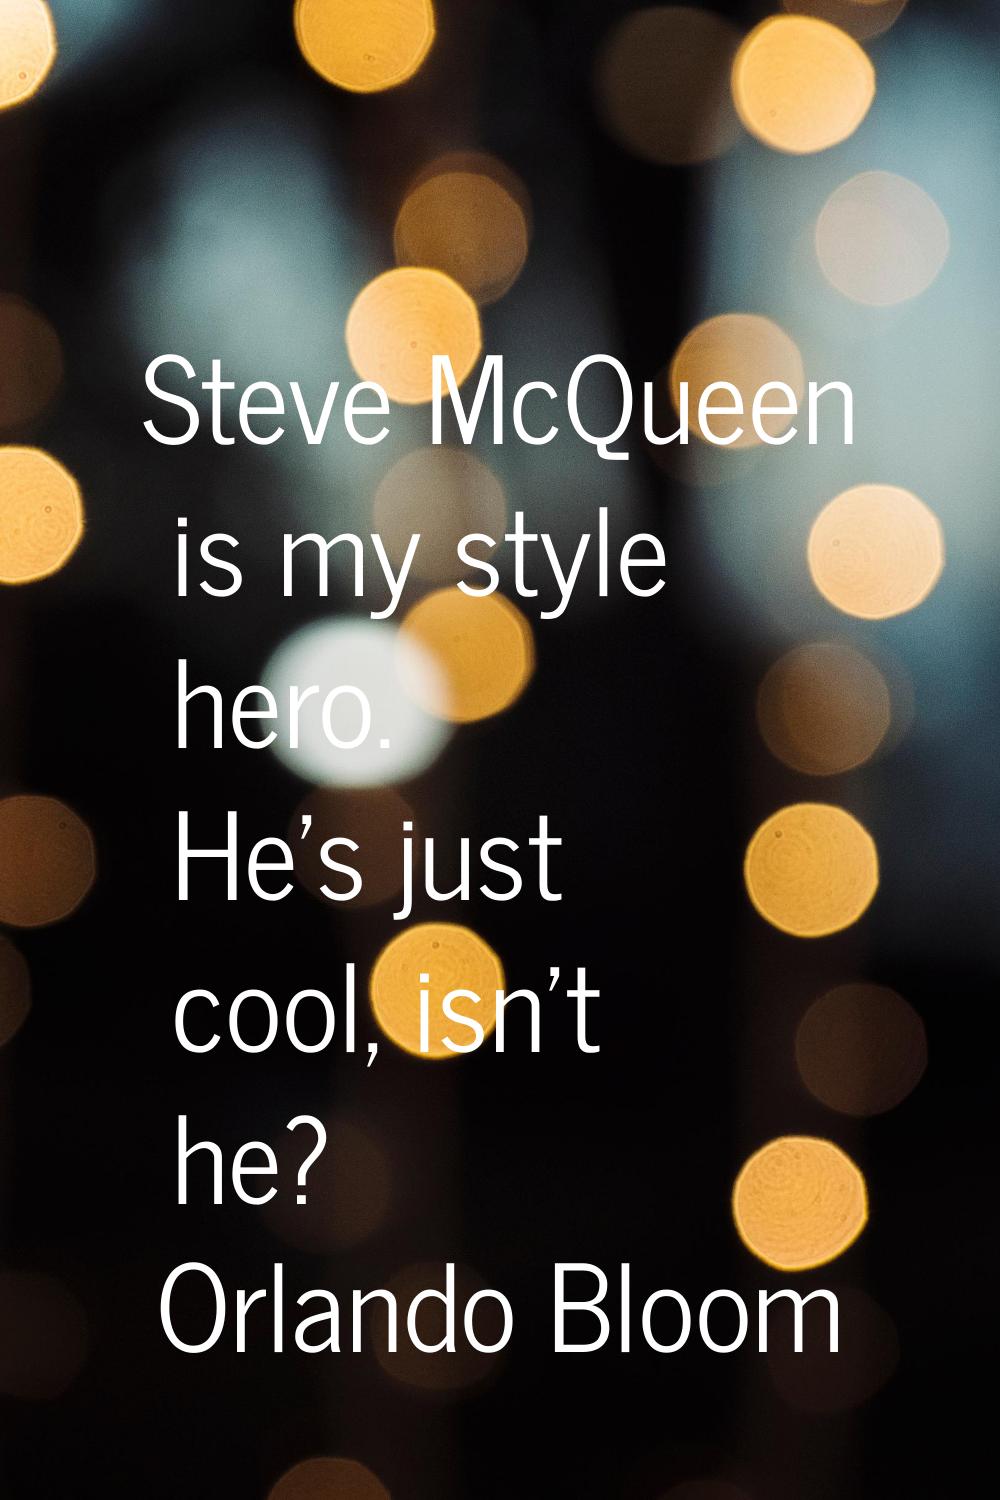 Steve McQueen is my style hero. He's just cool, isn't he?